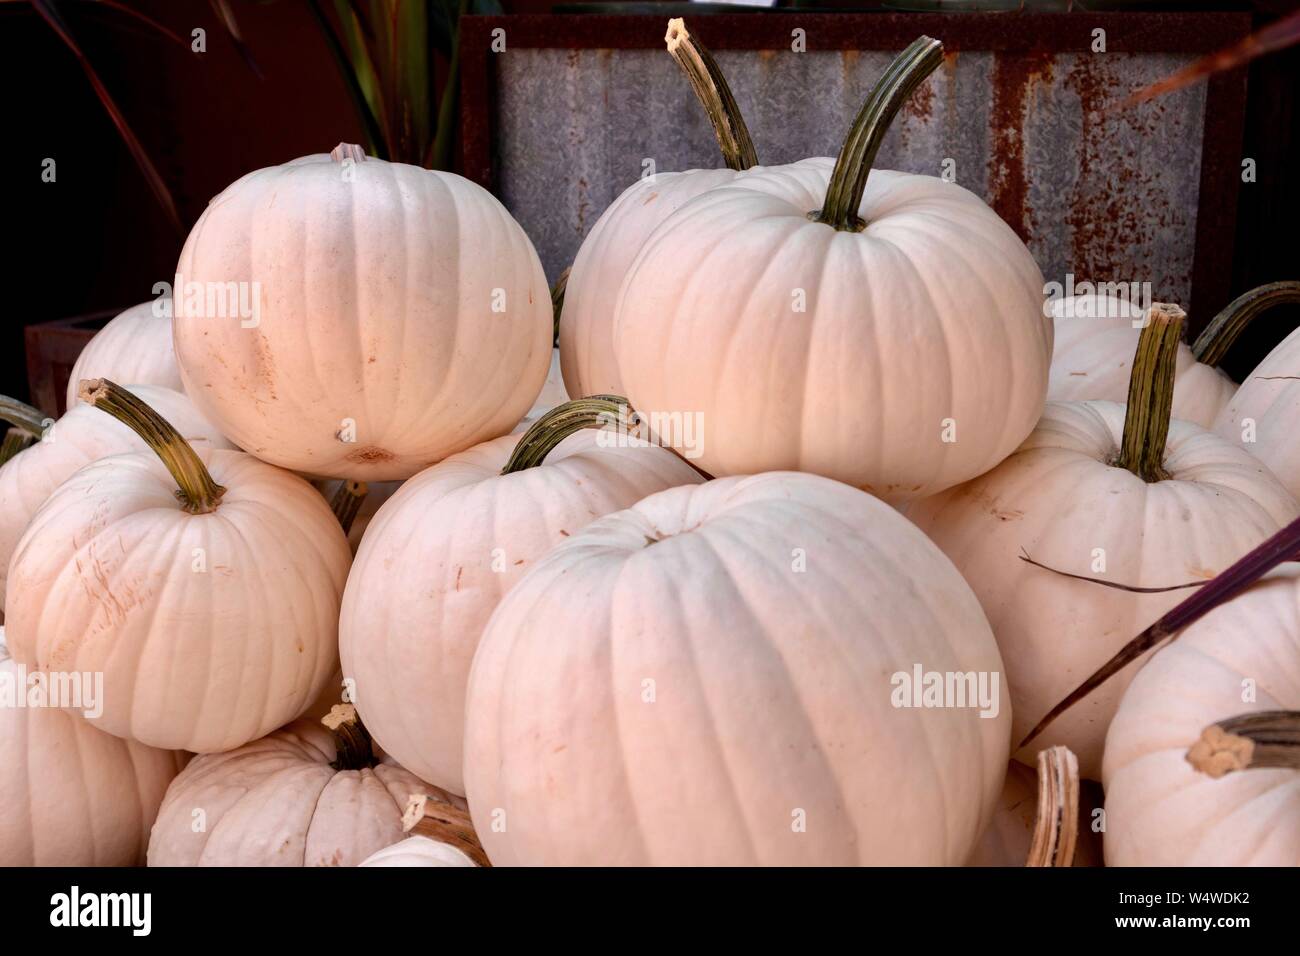 Pile of white pumpkins Stock Photo